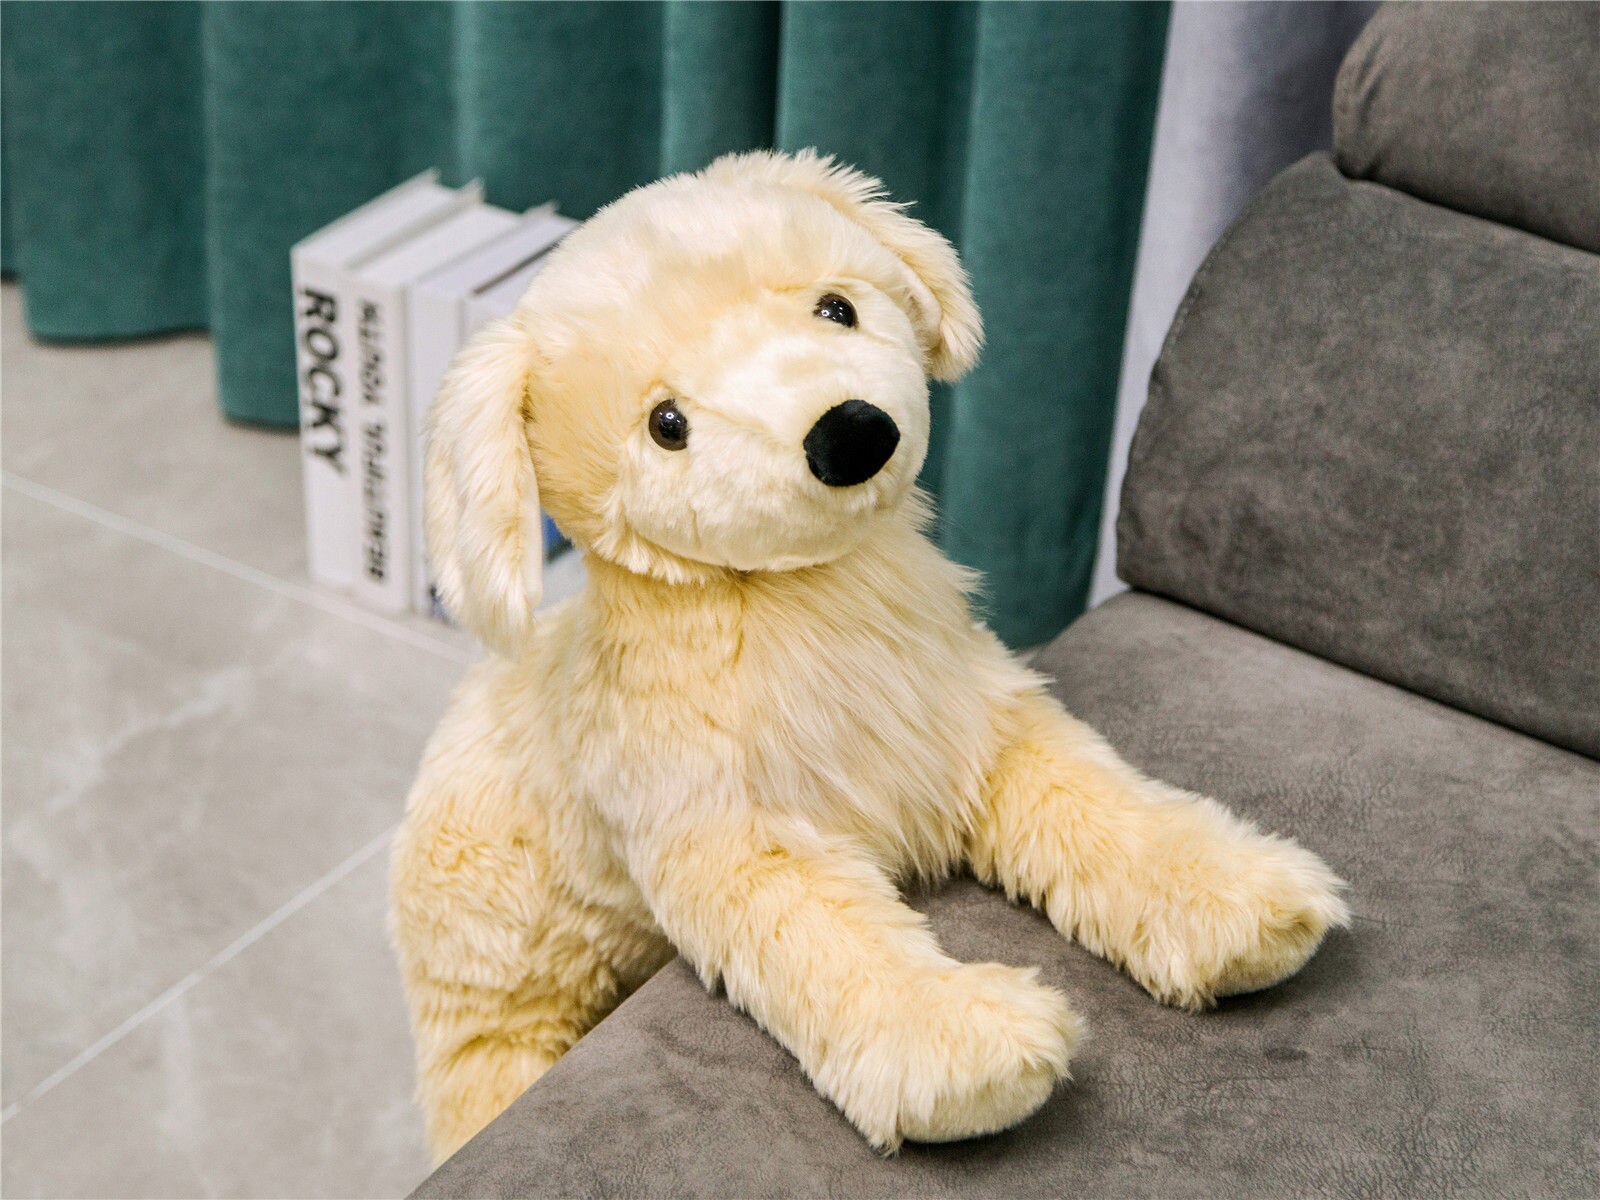 30-50CMSimulation Golden Retriever Labrado Dog Long-haired Dog Plush Toy Stuffed Animals Home Decoration Birthday Christmas Gift